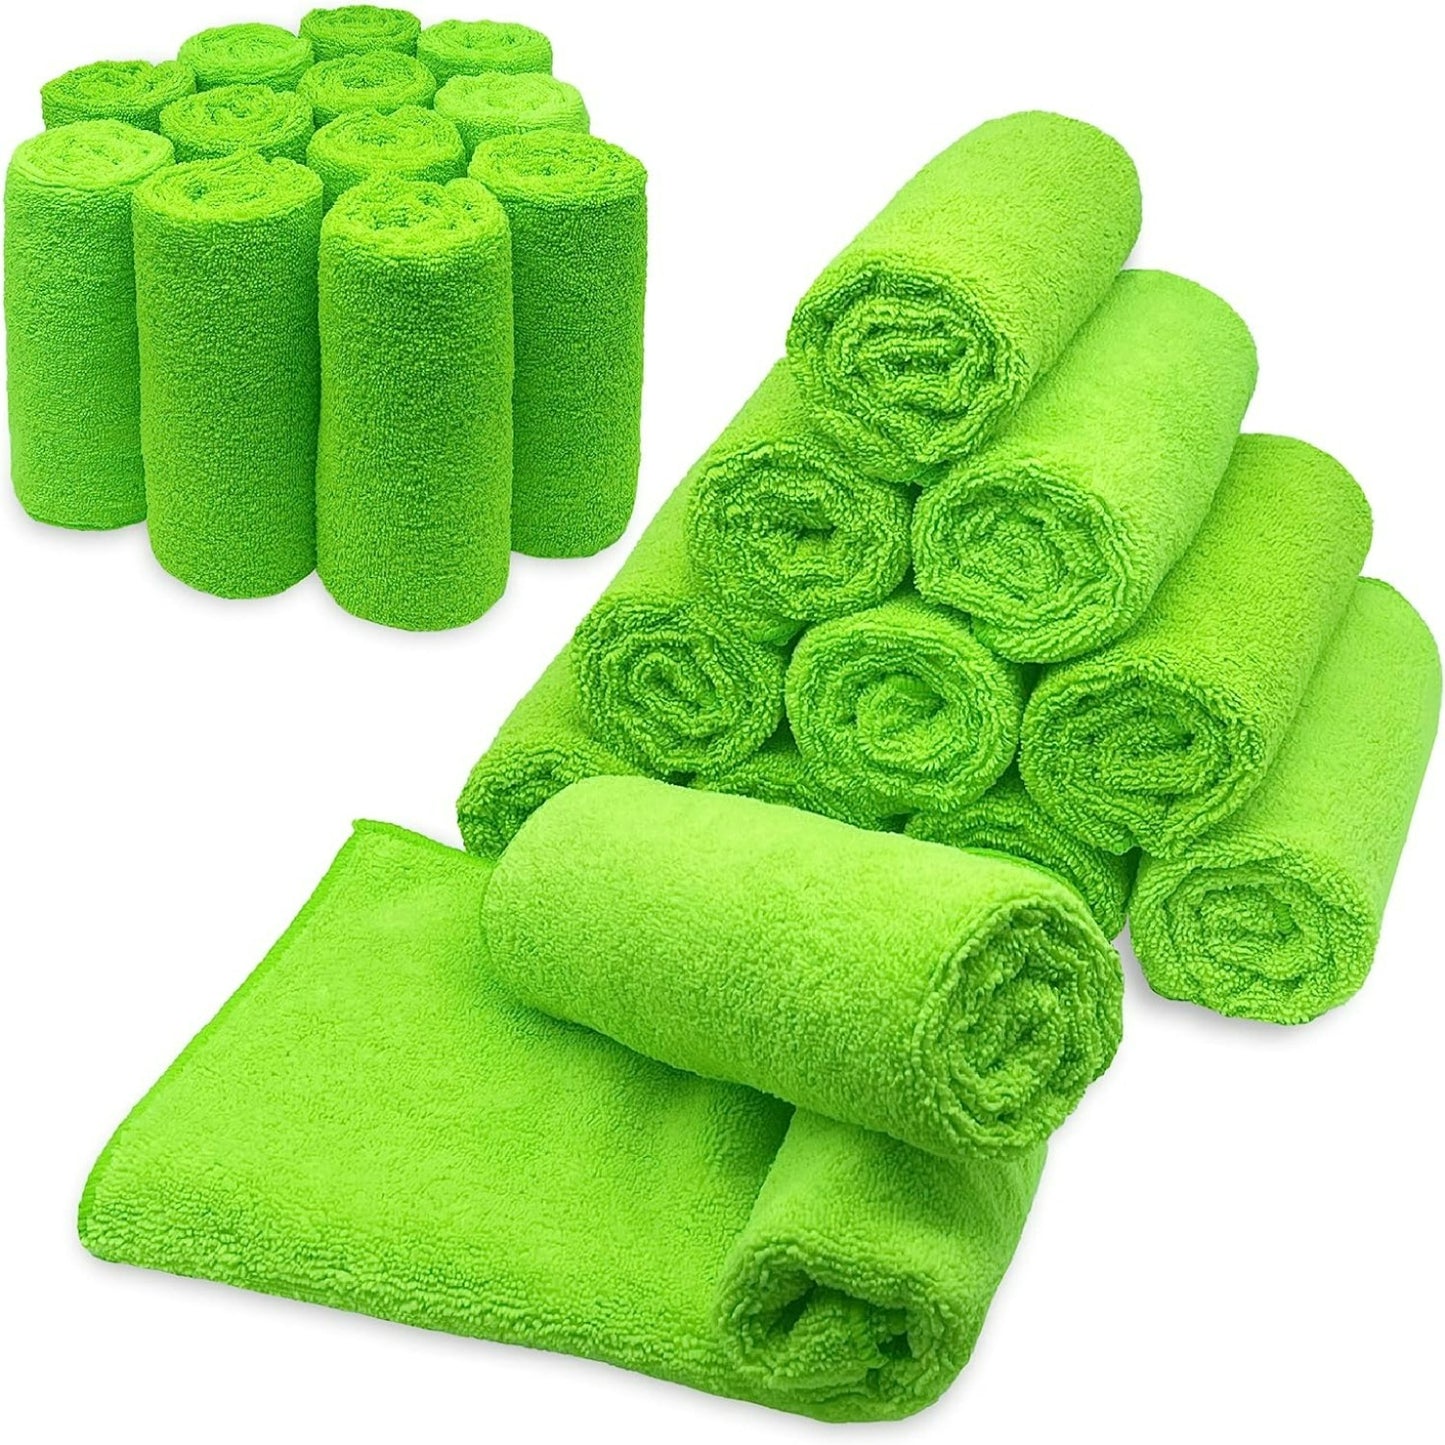 Reusable Kitchen Unpaper Towels Set Solid Colors